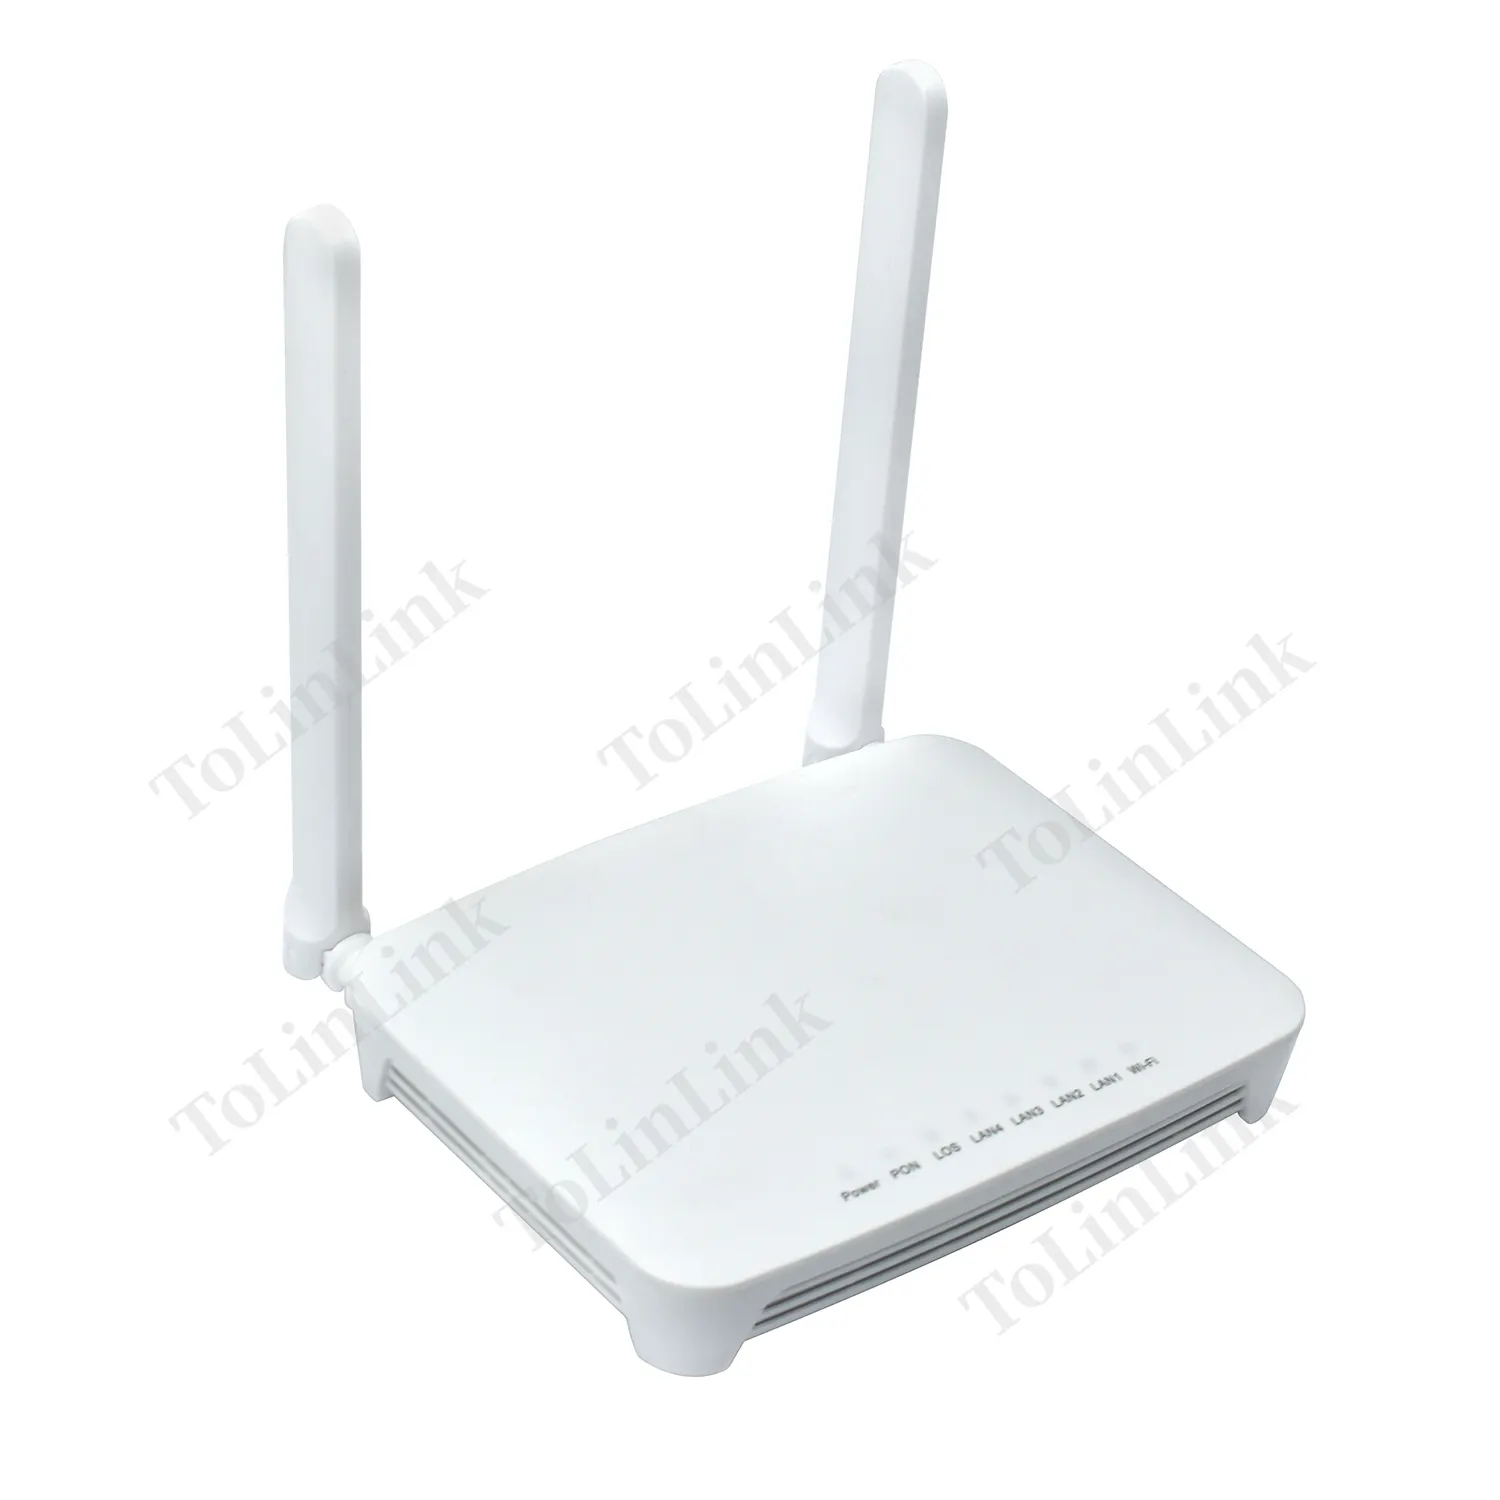 هاتف Tolinlink H2-3 1GE 3FE 1TEL 1USB WPS متصل بشبكة WiFi